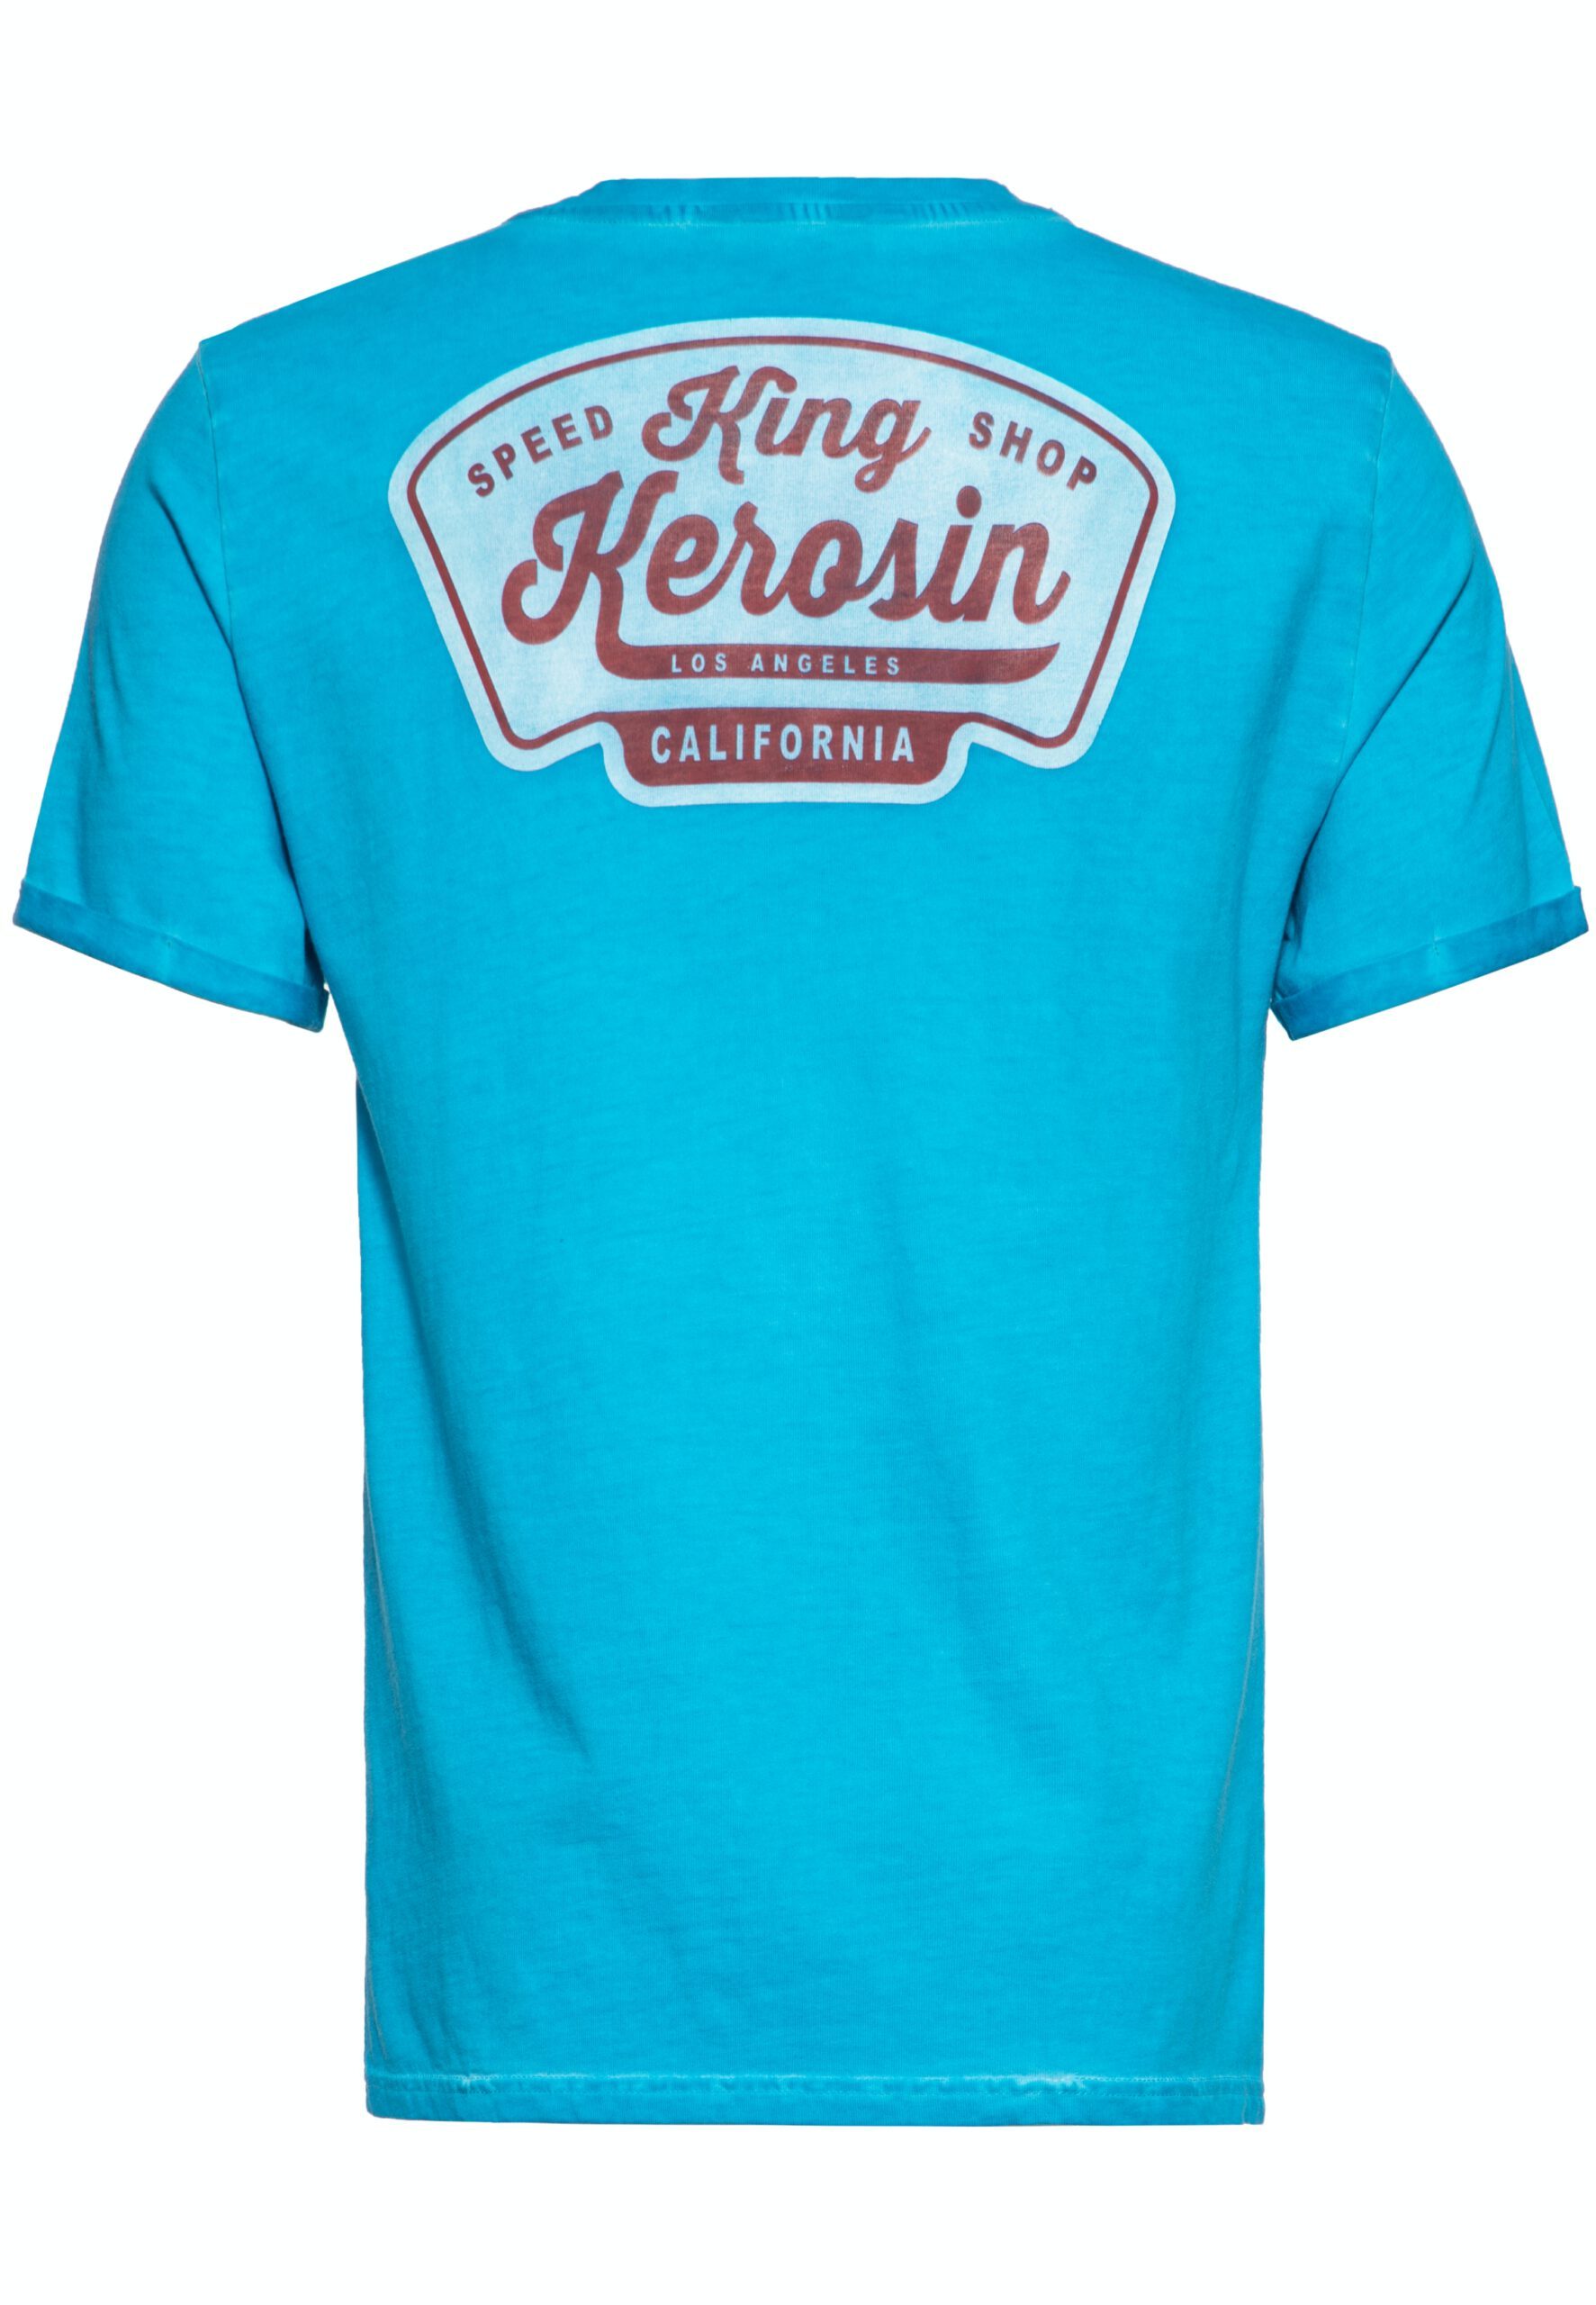 Oil MoFa Lounge Kerosin« King – Kerosin King T-Shirt »Speedshop Washed